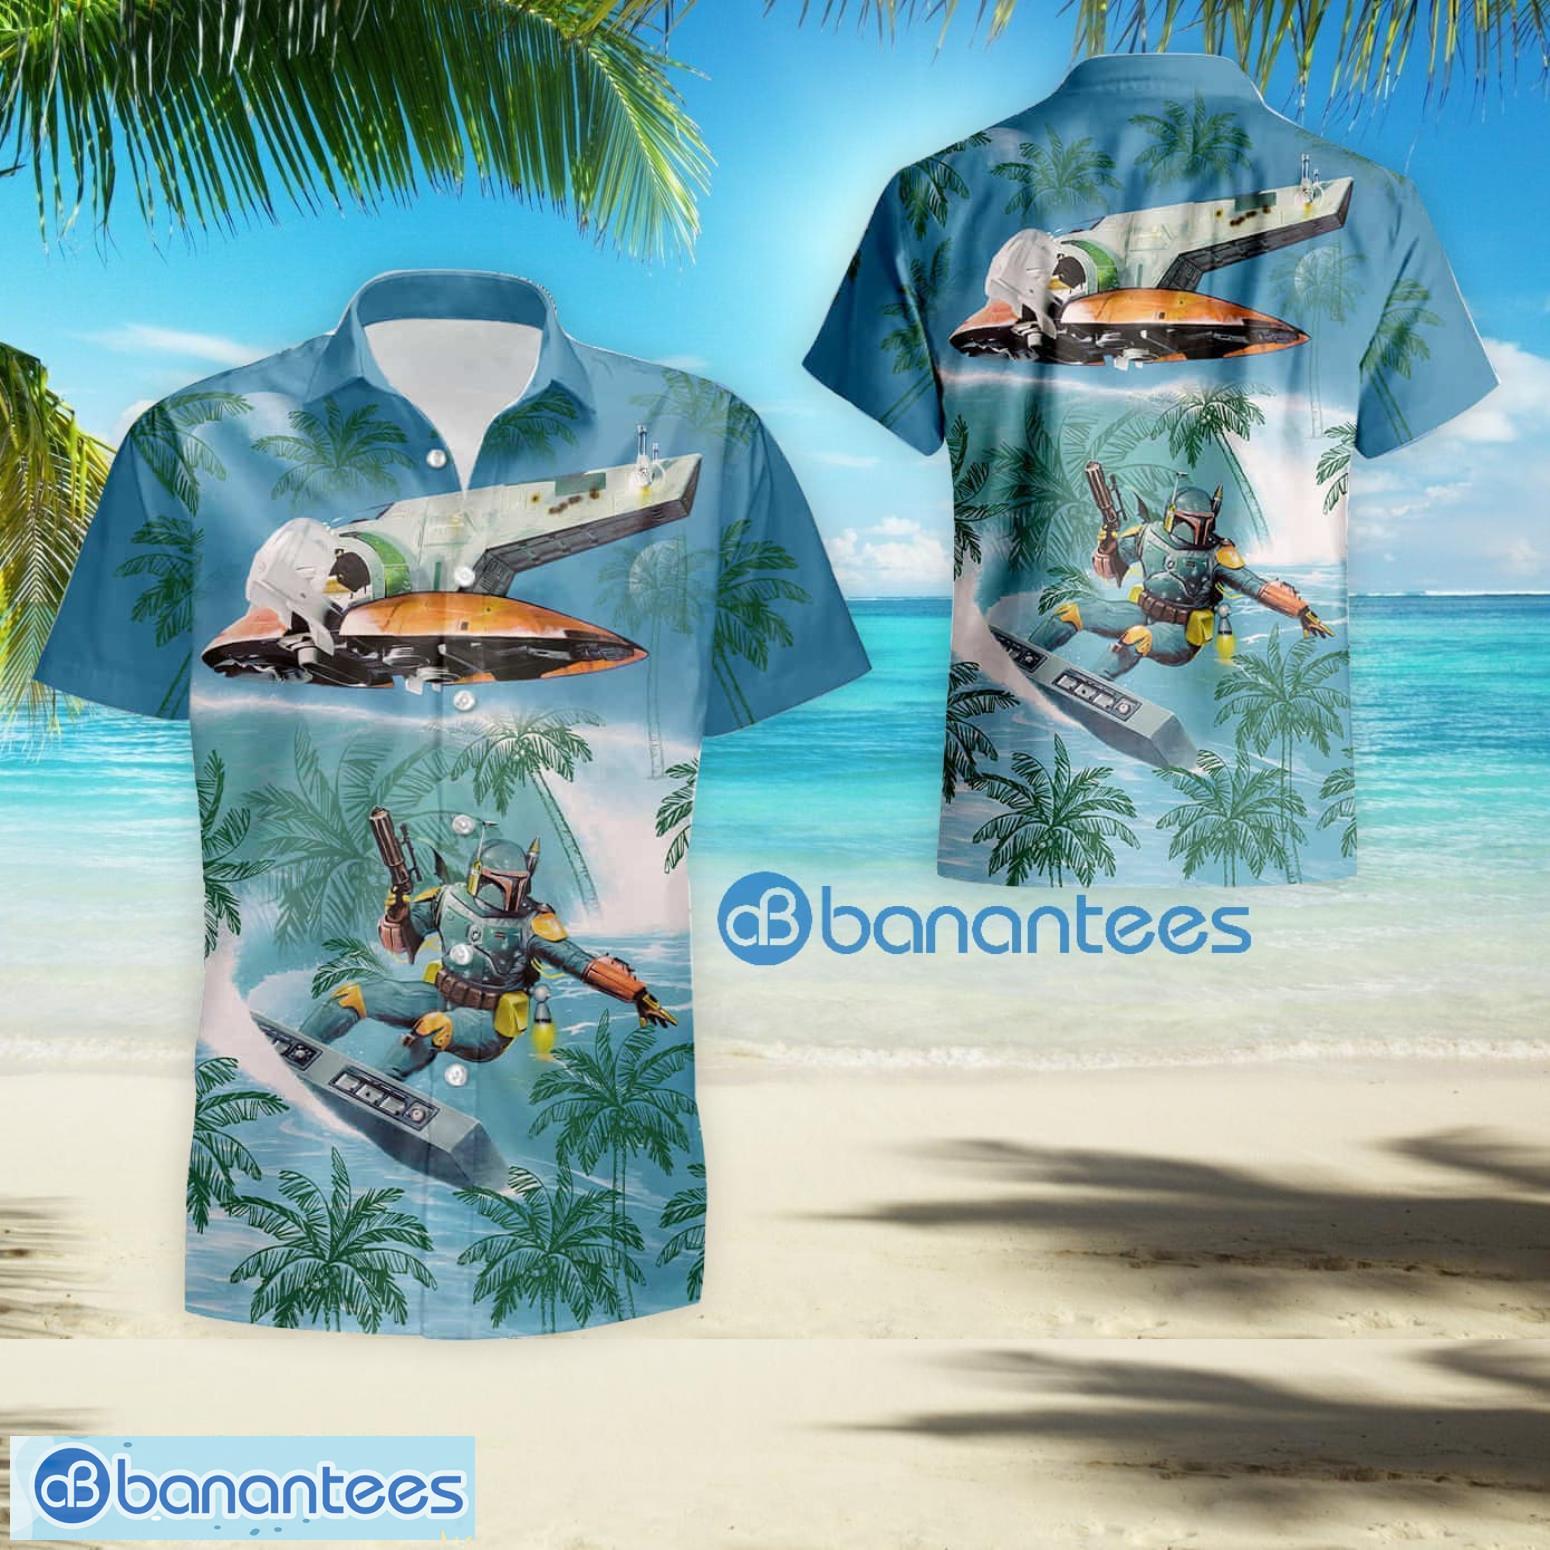 Star Wars 3D Hawaiian Shirts Gift For Men And Women - Banantees